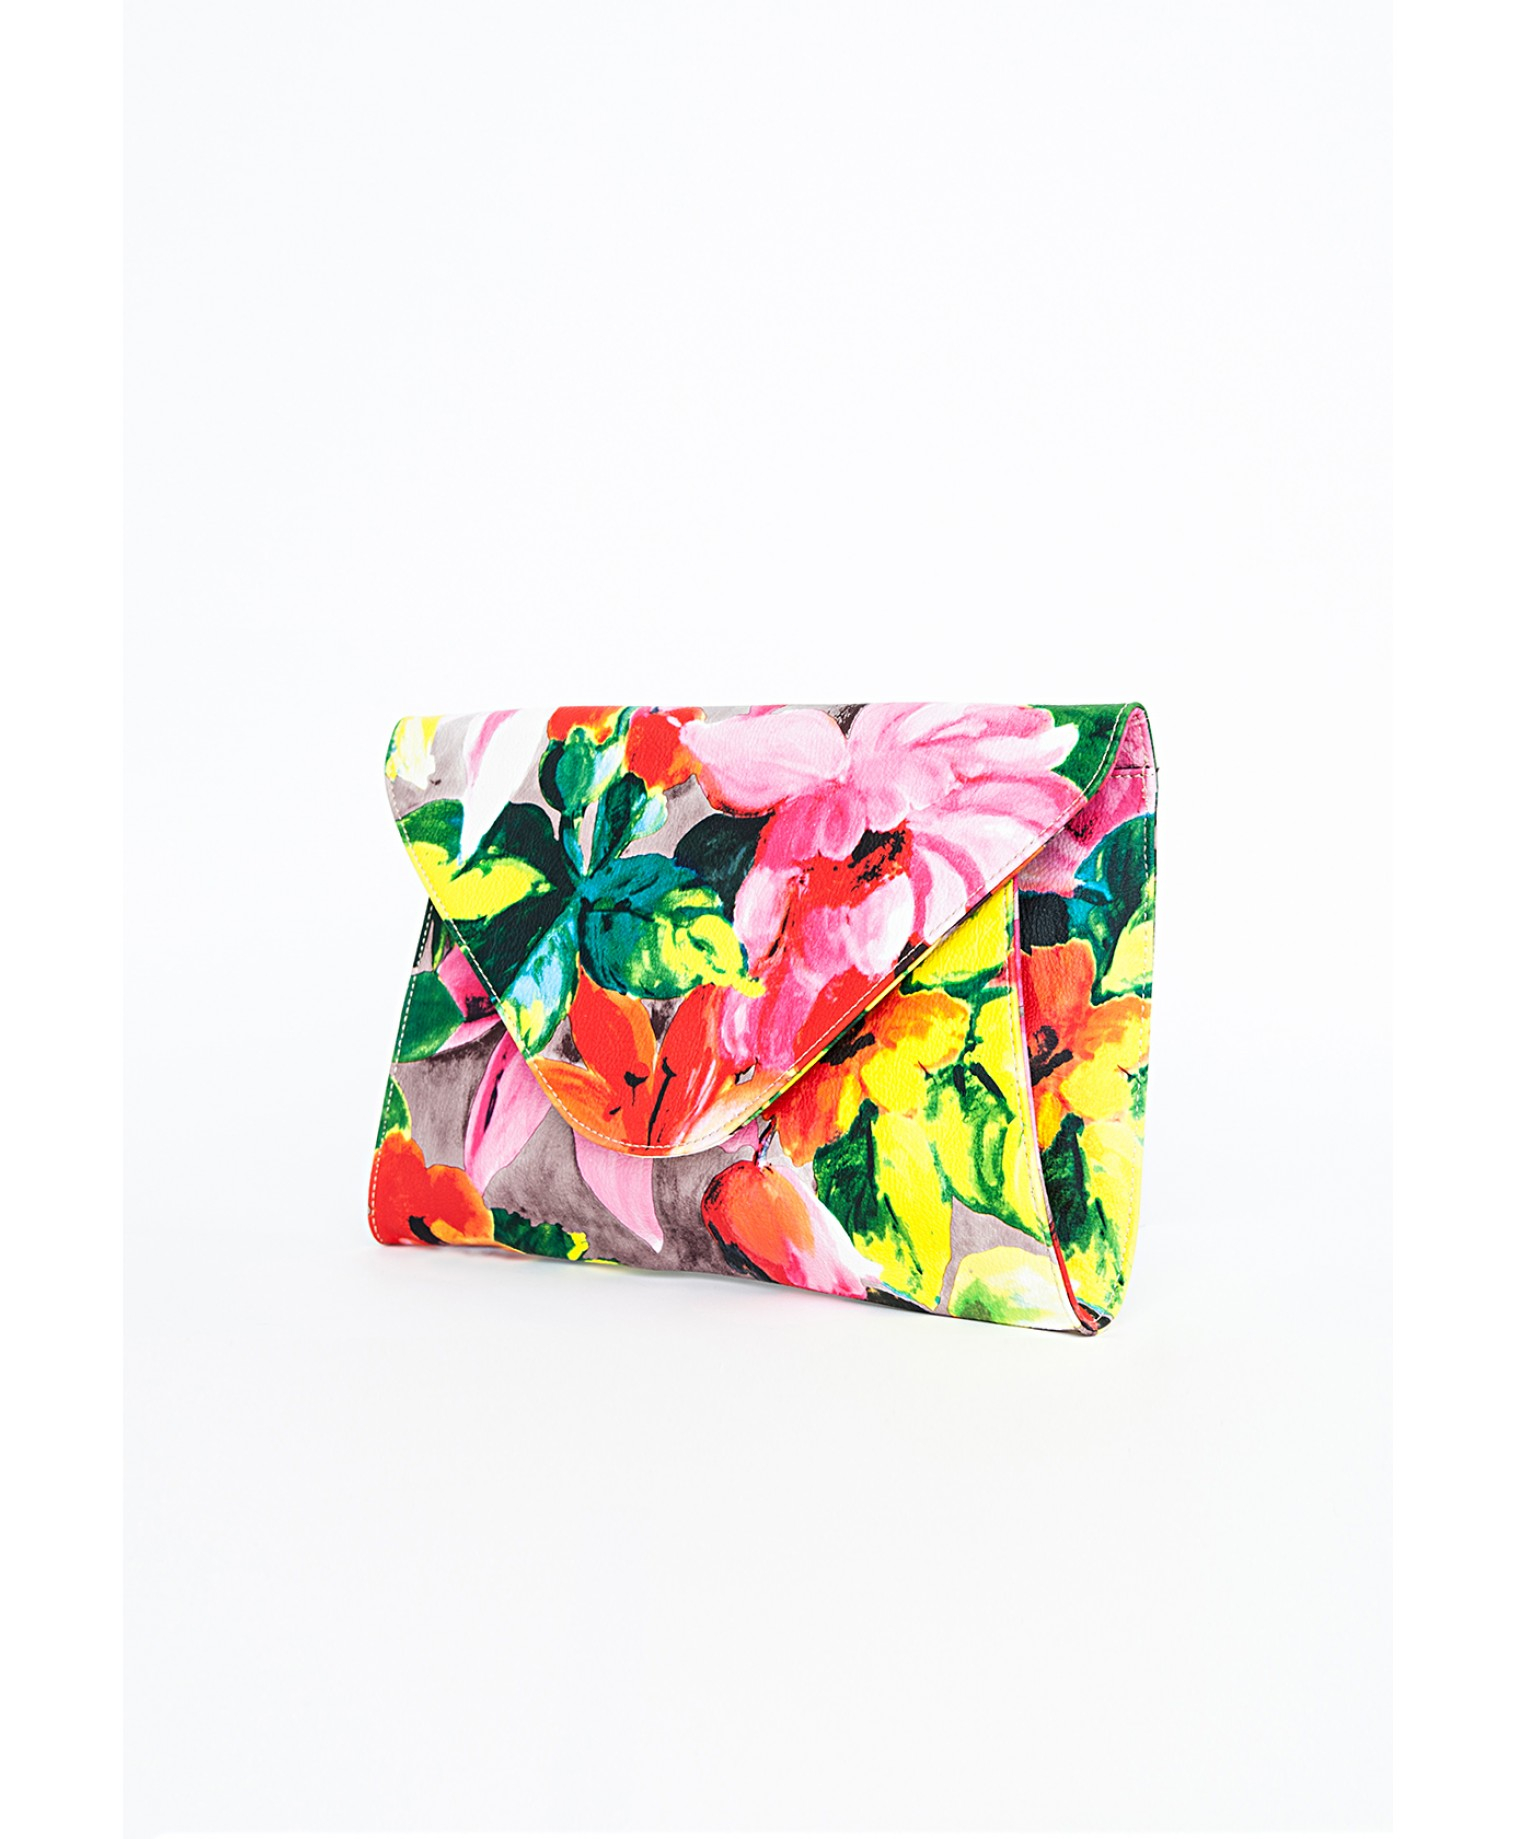 Missguided Floral Envelope Clutch Bag in Floral | Lyst